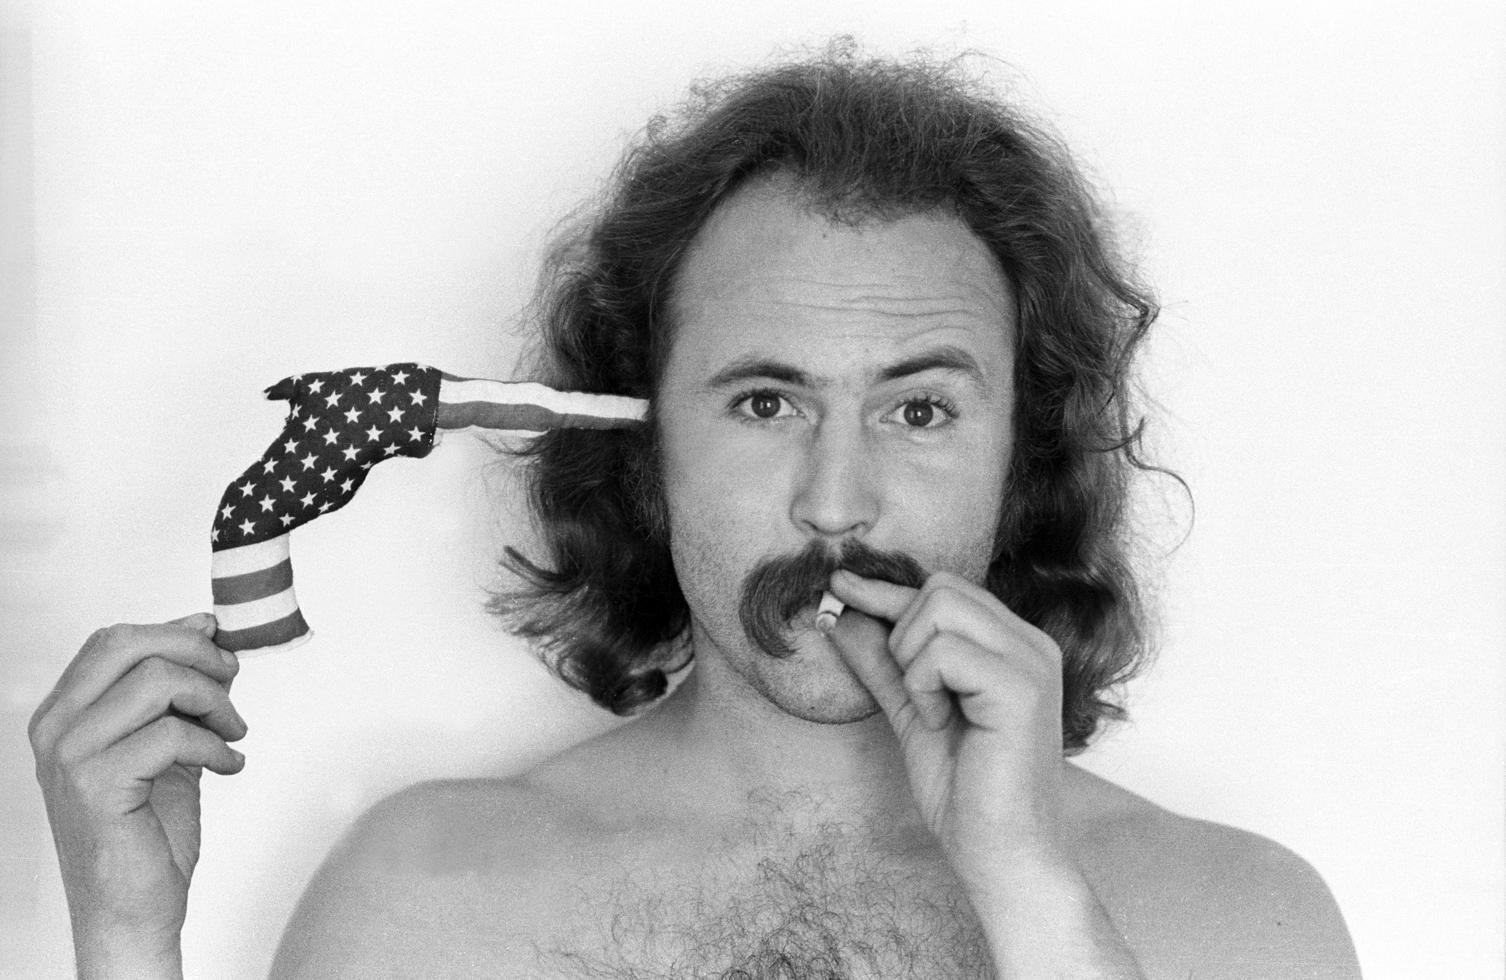 Henry Diltz Black and White Photograph - David Crosby, "Flag Gun", 1970